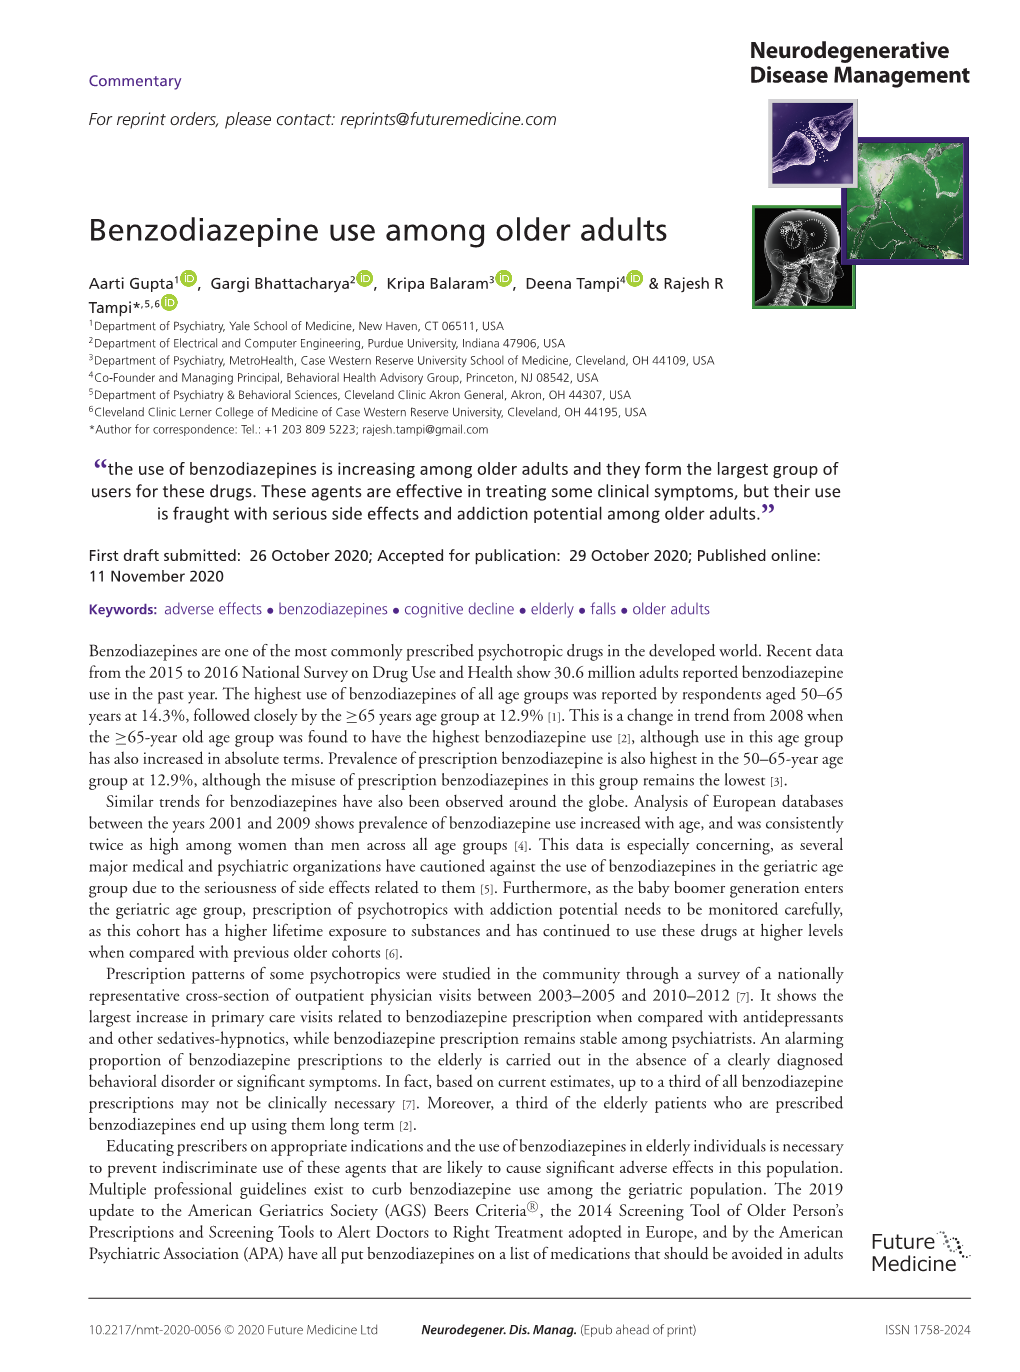 Benzodiazepine Use Among Older Adults